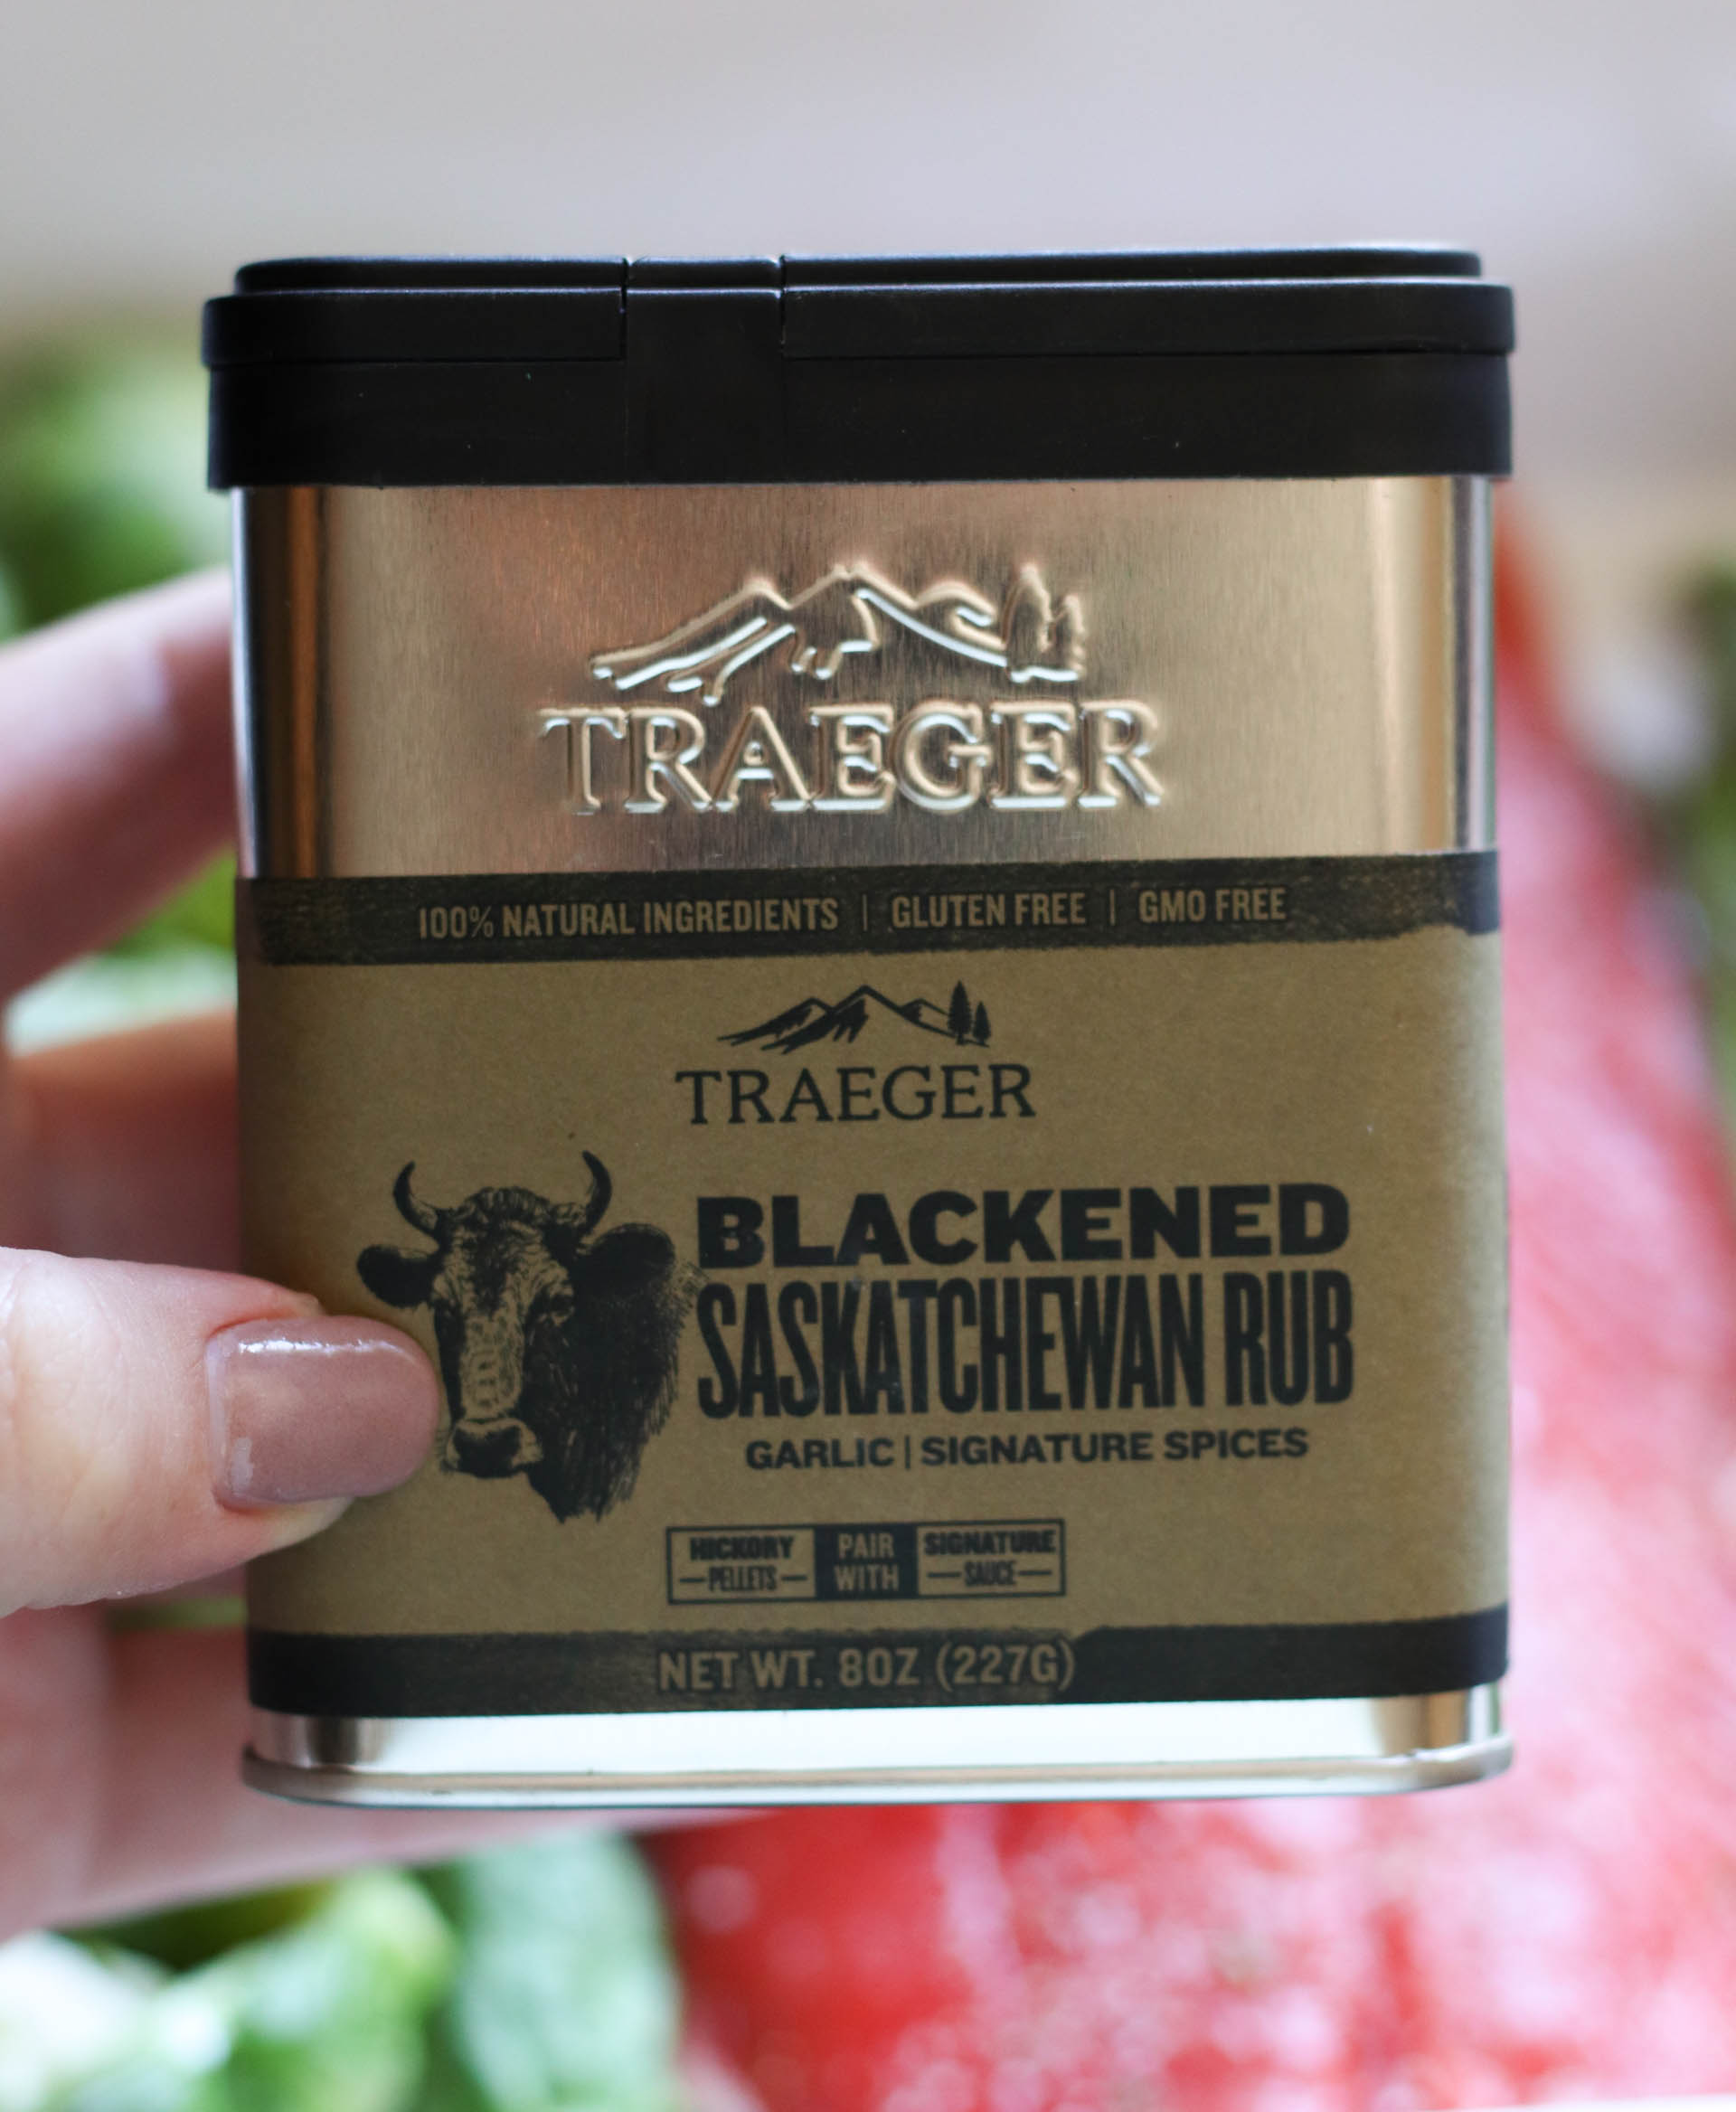 Traeger blackened Saskatchewan rub